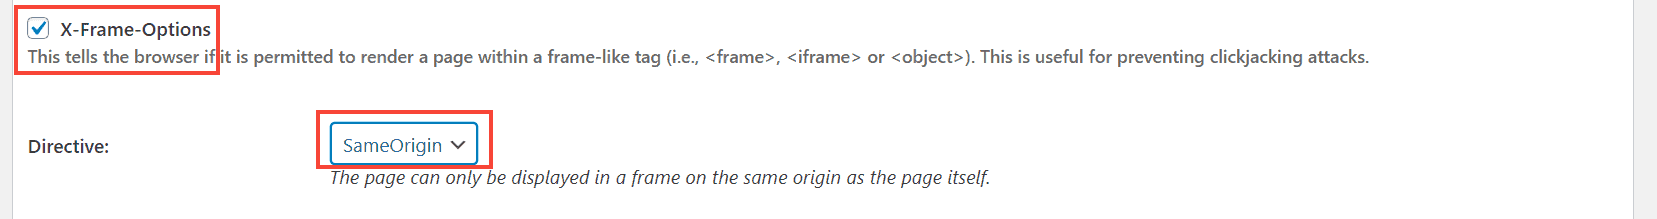 add x-frame-options